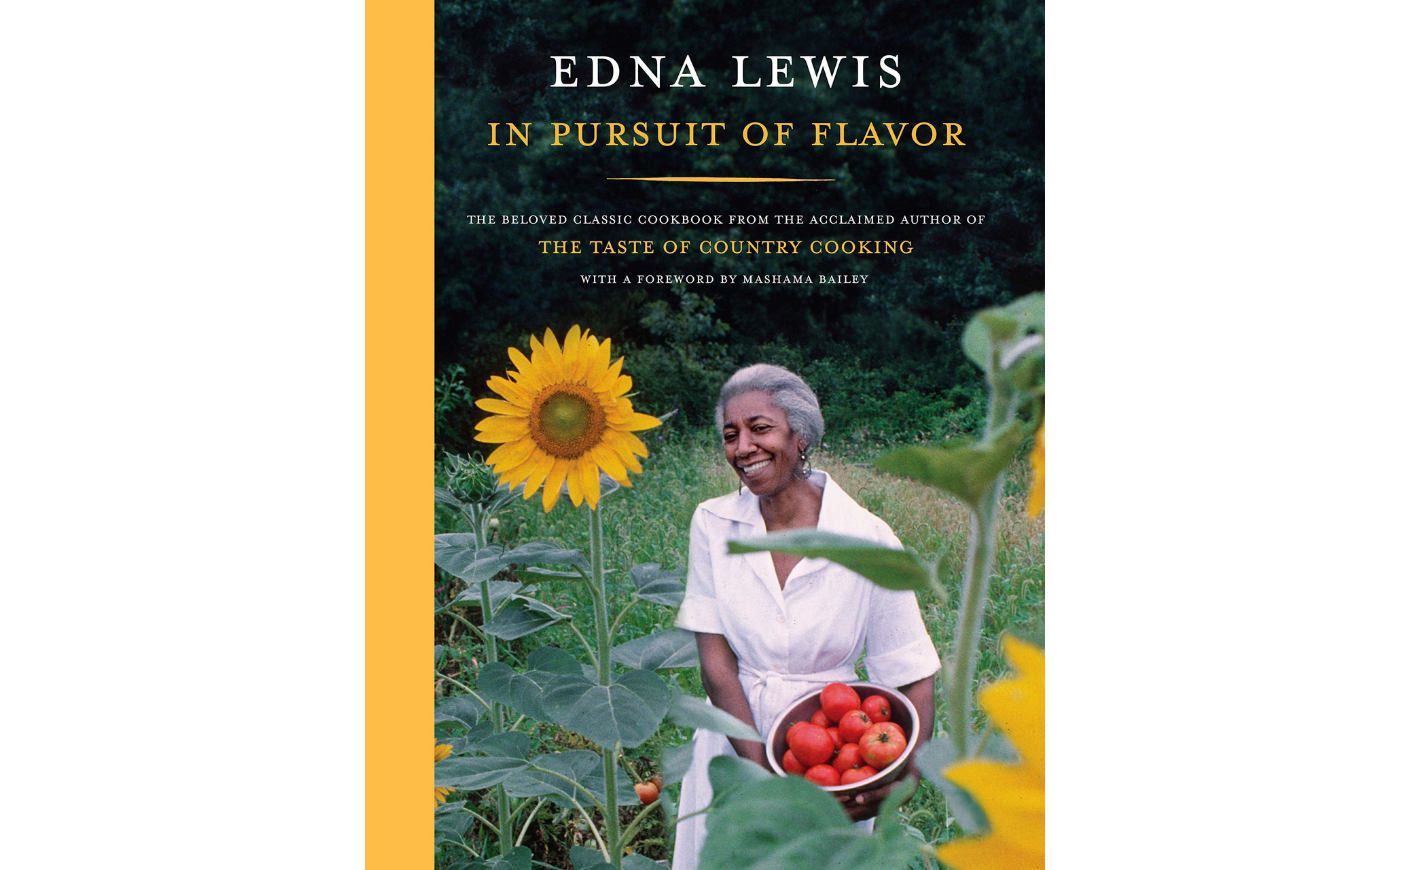 In Pursuit of Flavor, Edna Lewis